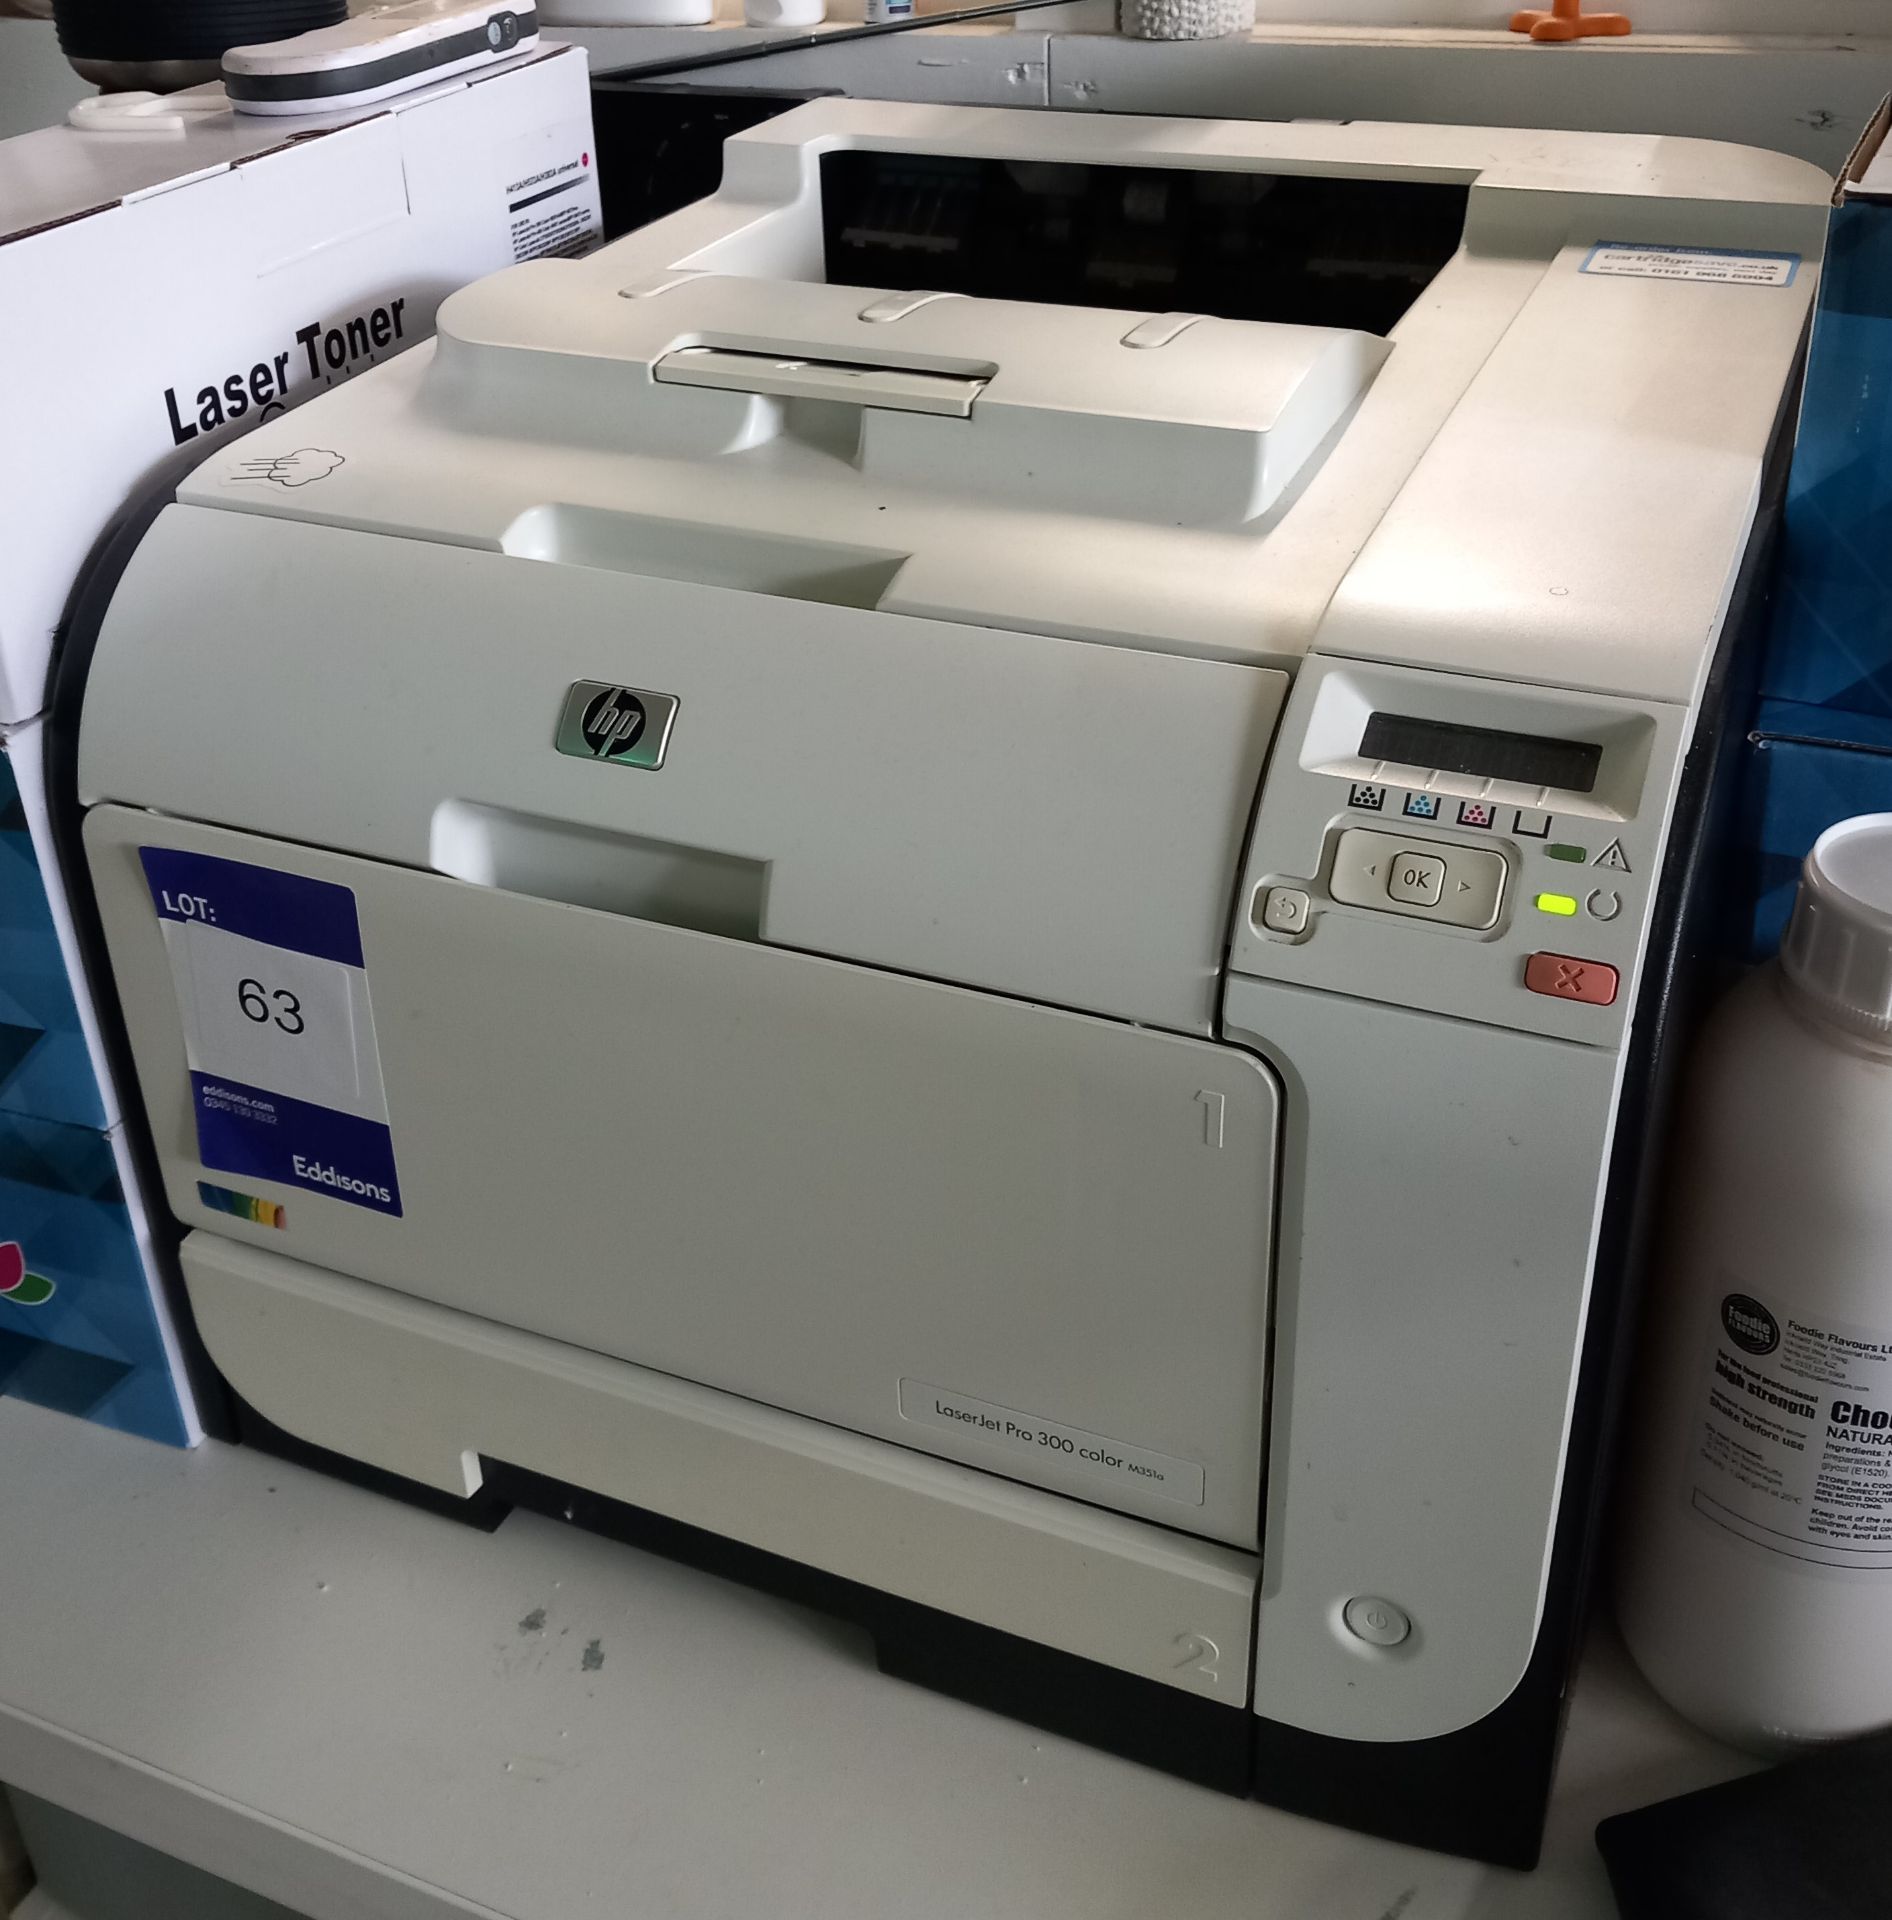 HP Pro300 laser printer